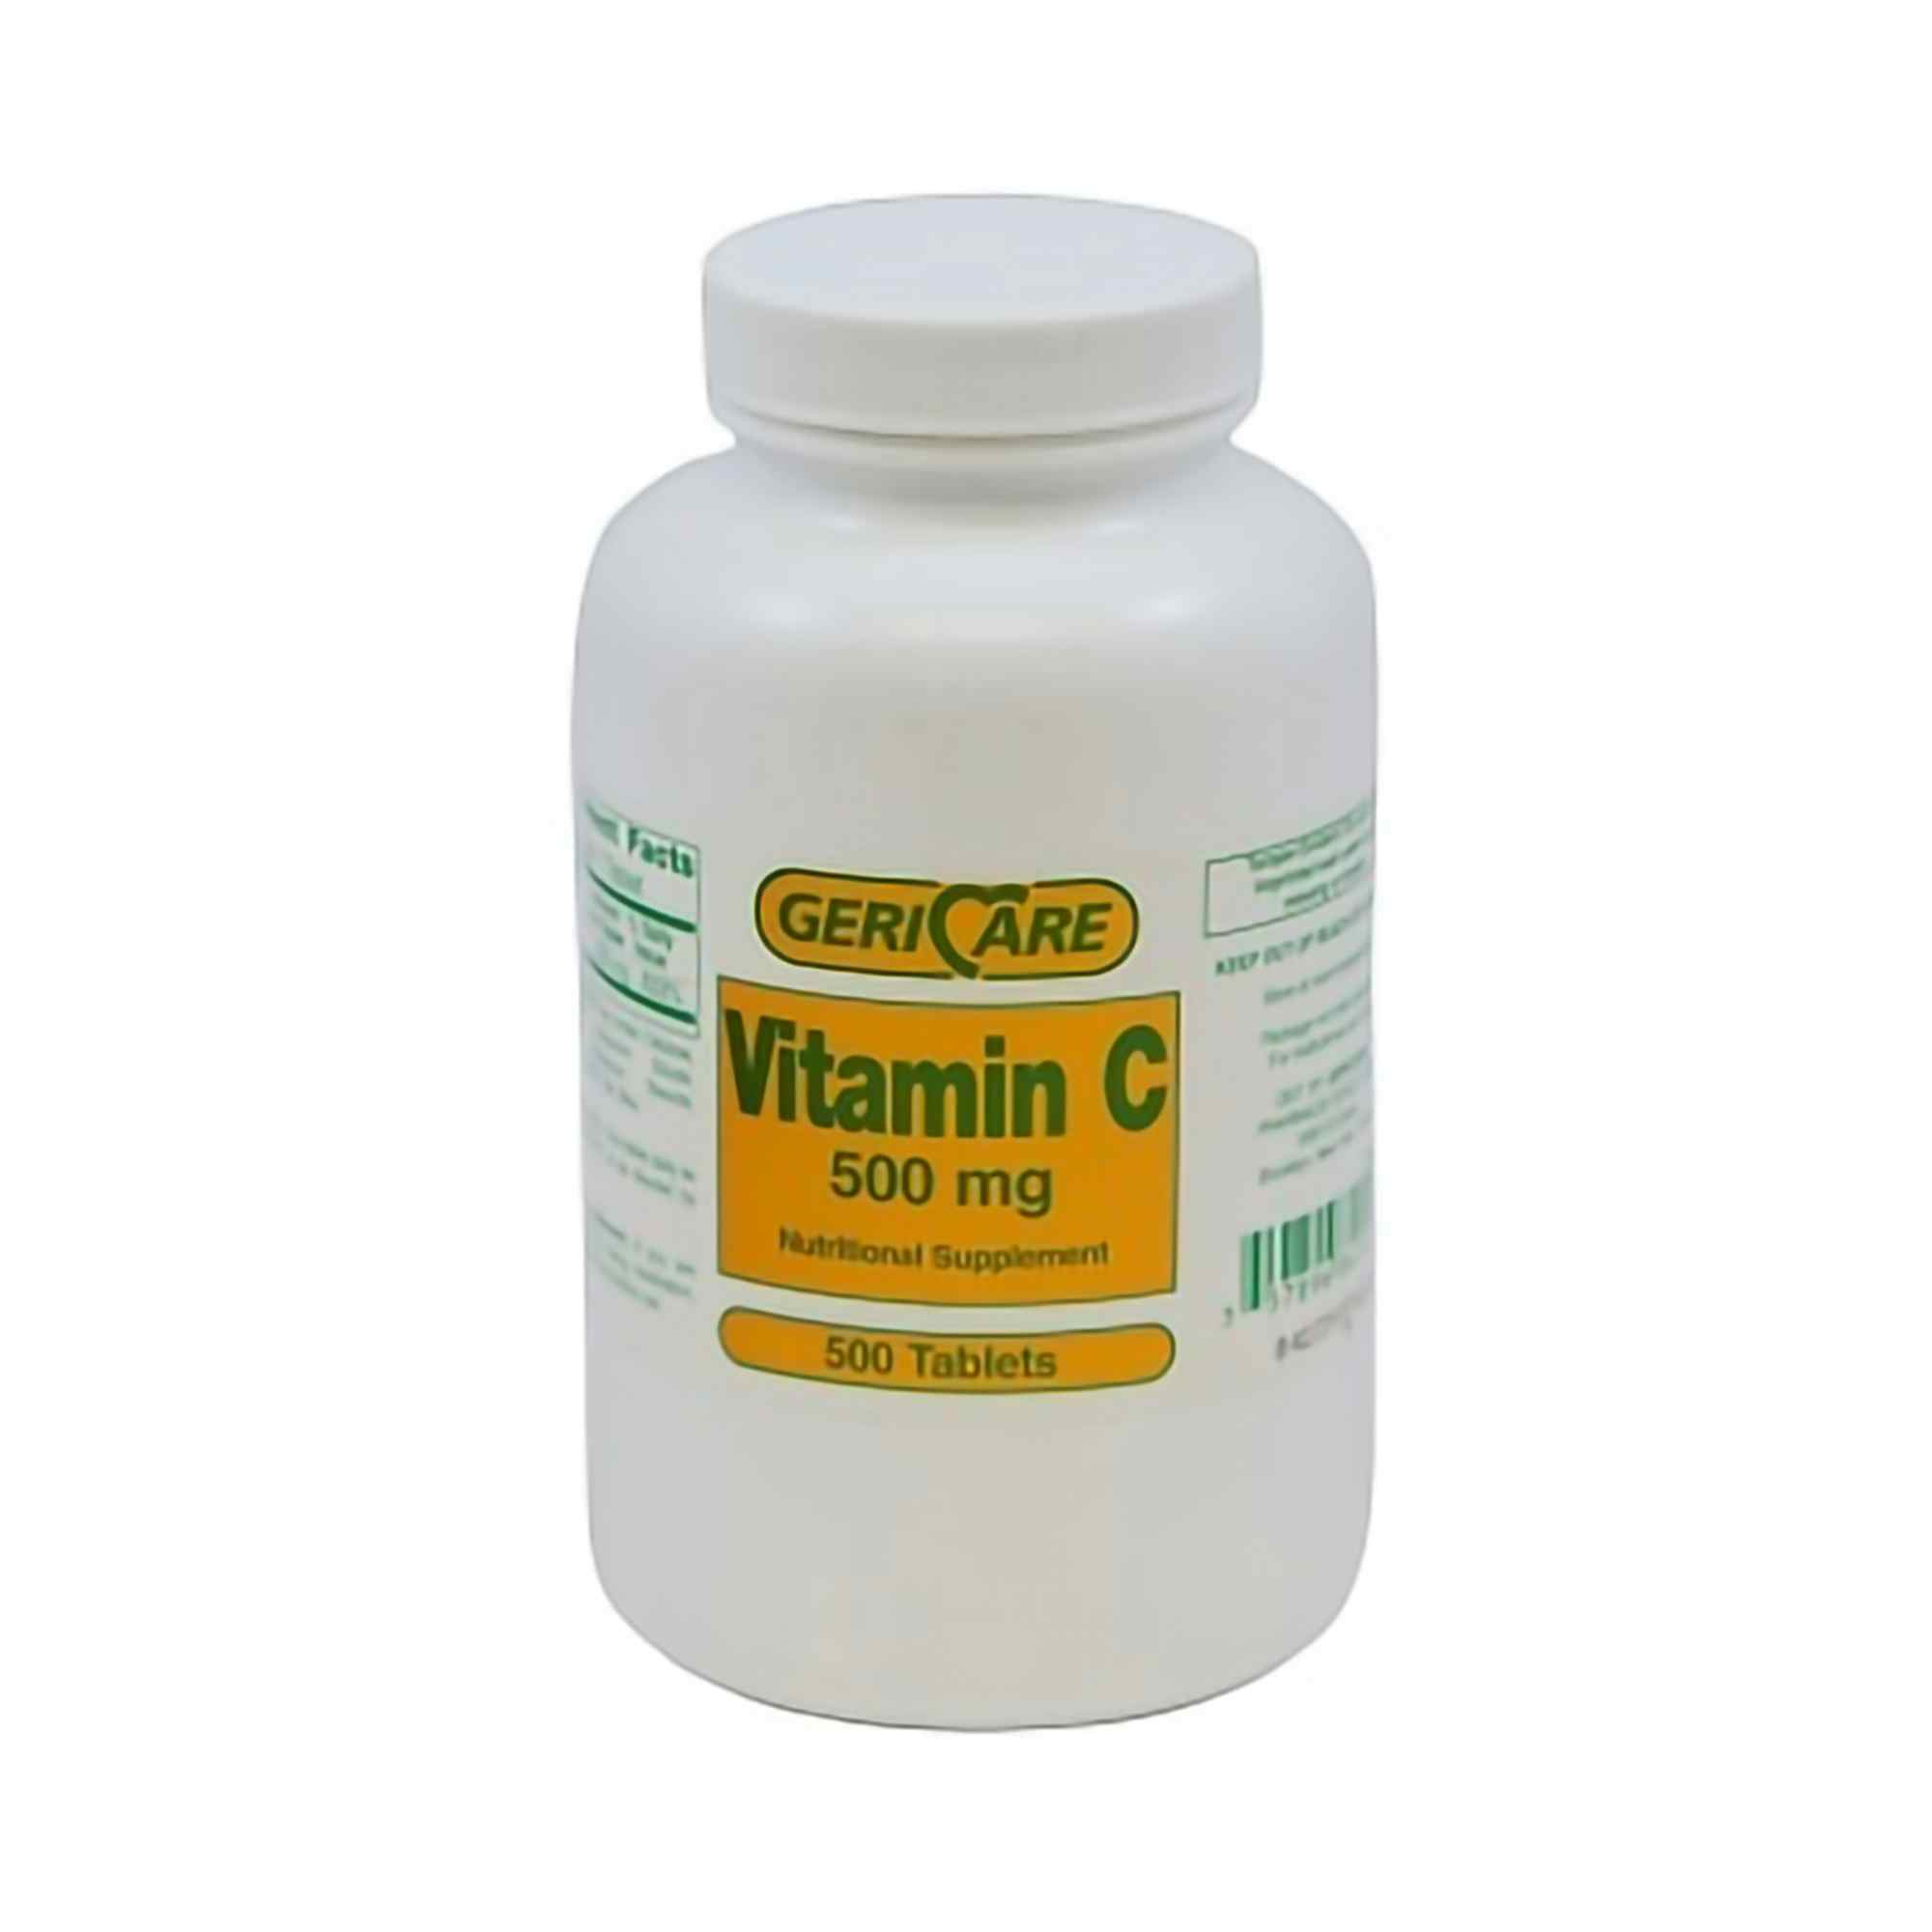 Geri-Care Ascorbic Acid Vitamin C Supplement 500 mg, Tablet